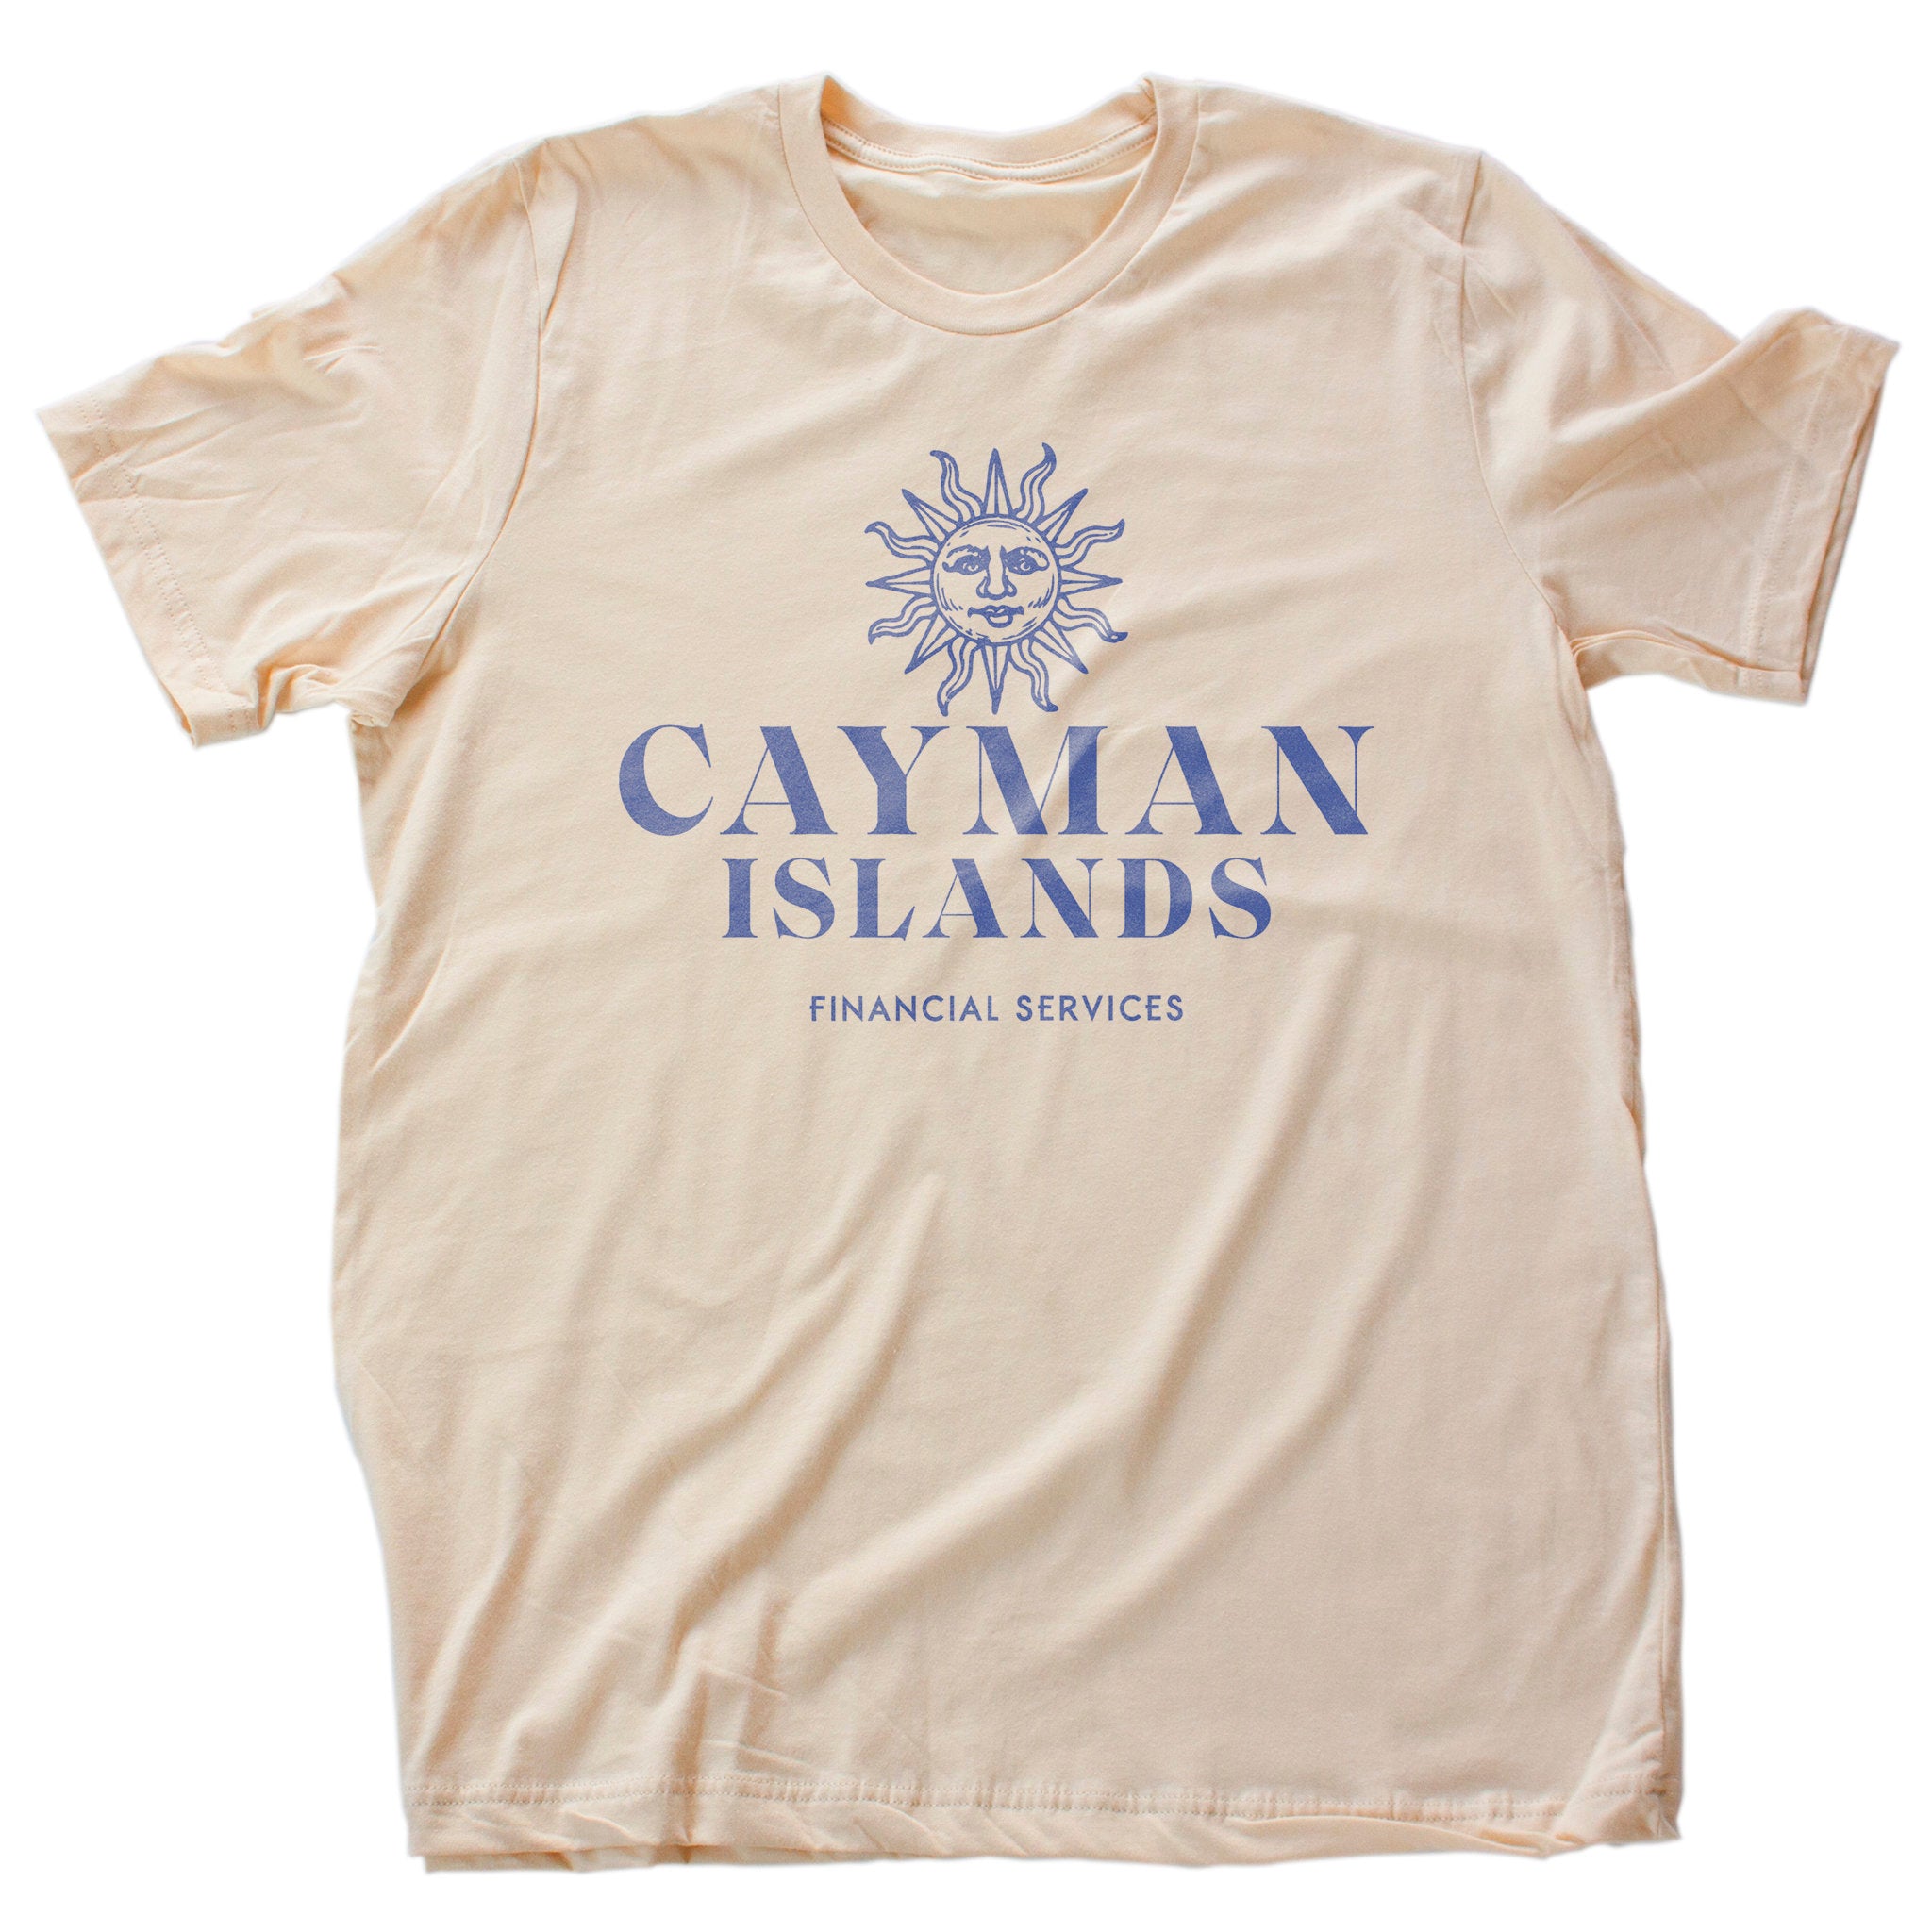 CAYMAN ISLANDS Financial Services — A Sarcastic Unisex T-Shirt